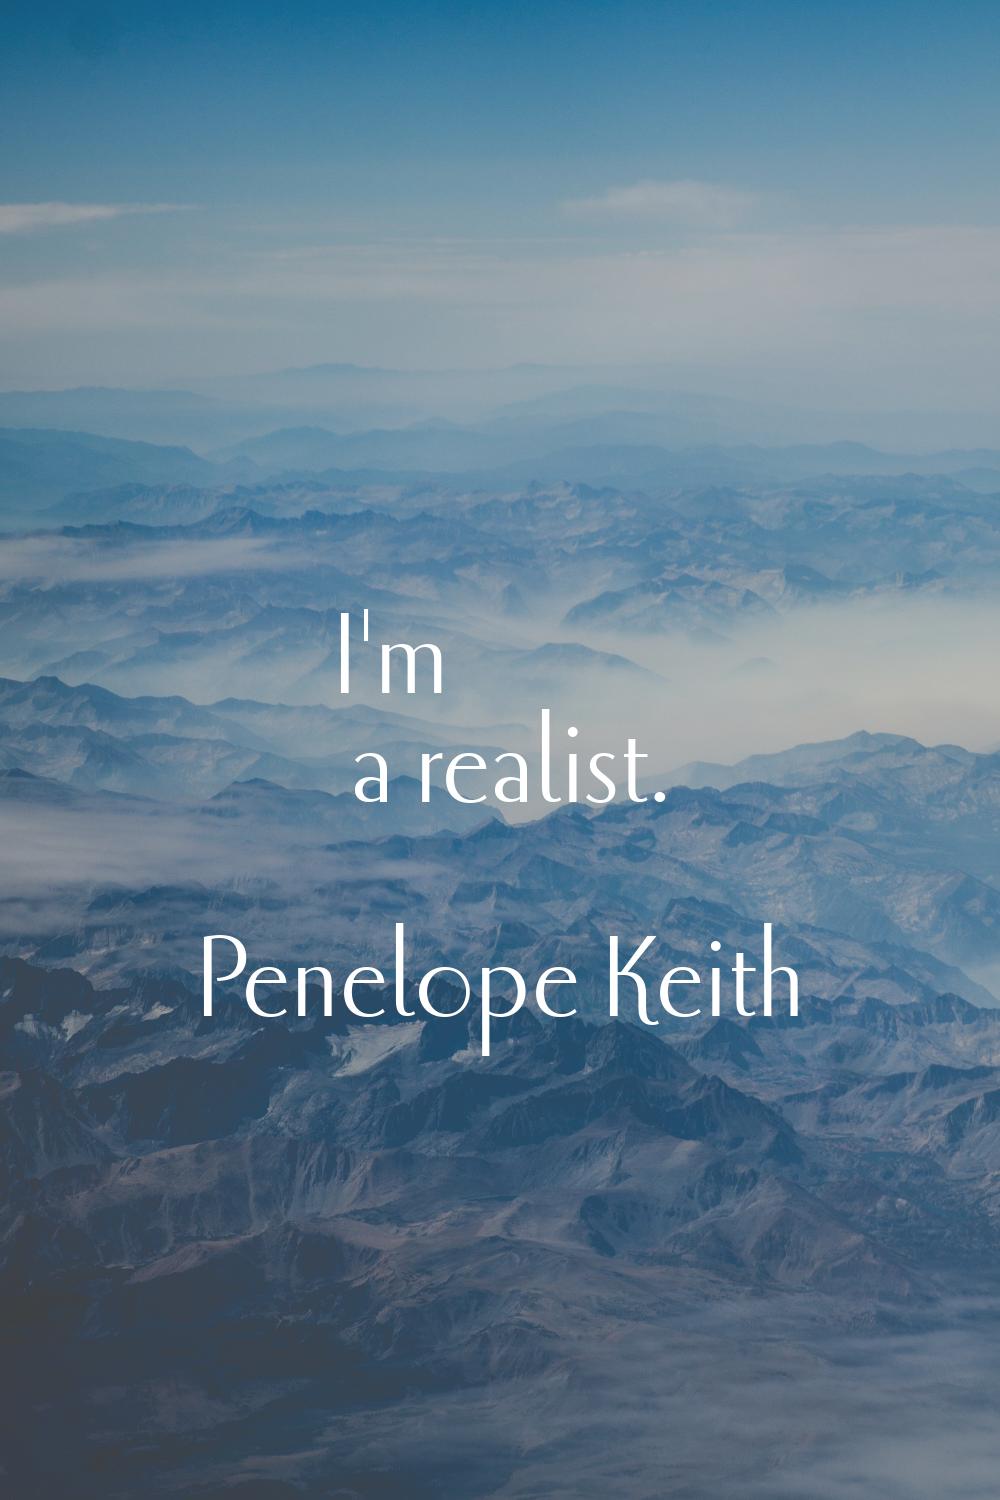 I'm a realist.